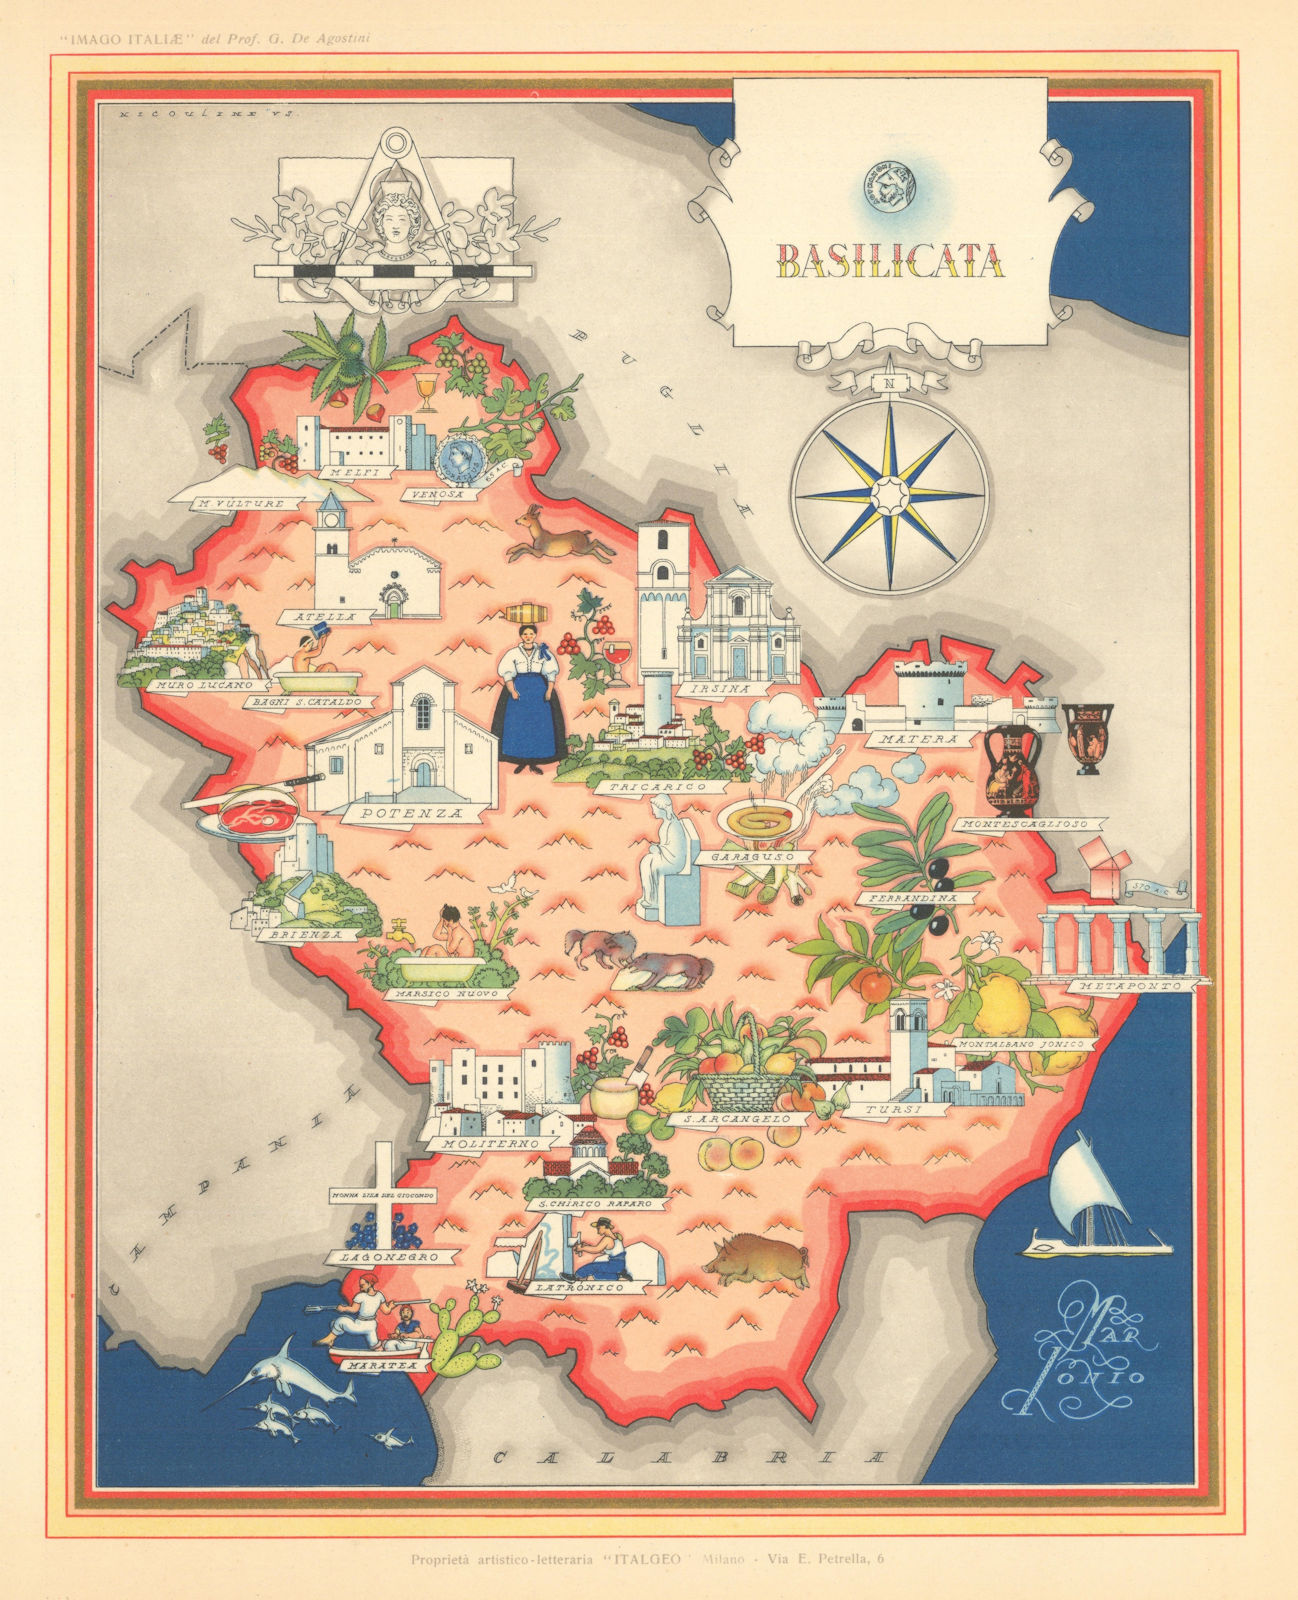 Basilicata pictorial map by Vsevolode Nicouline. Italgeo/Agostini c1950